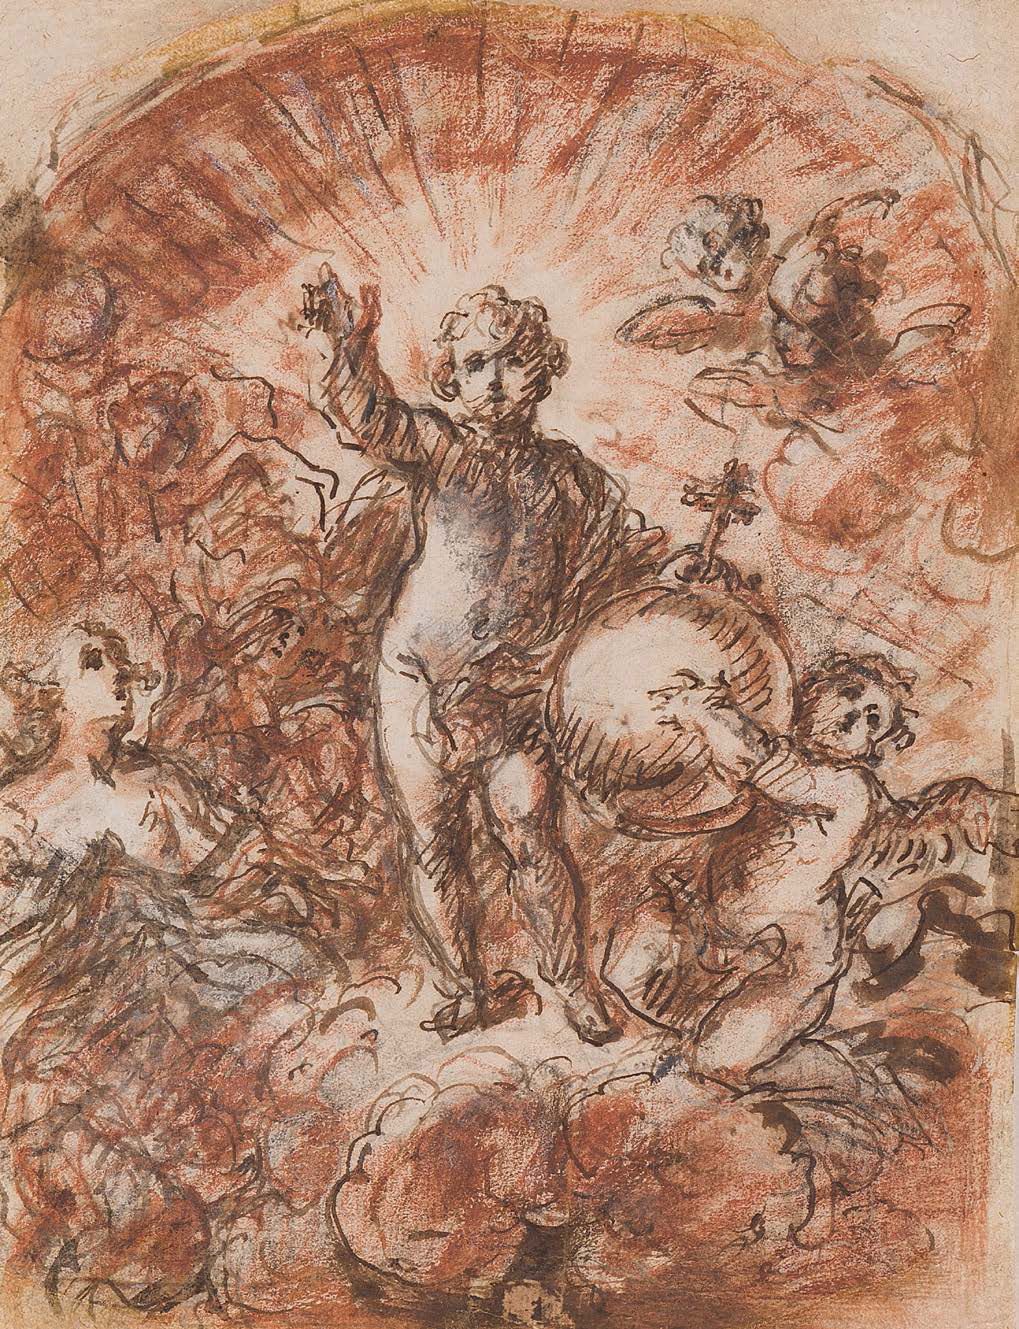 Philippe SAUVAN (Arles 1697 - Avignon 1792) 作为世界救世主的耶稣和天使
黑石、红粉笔、钢笔和棕色墨水，白色高光 21&hellip;